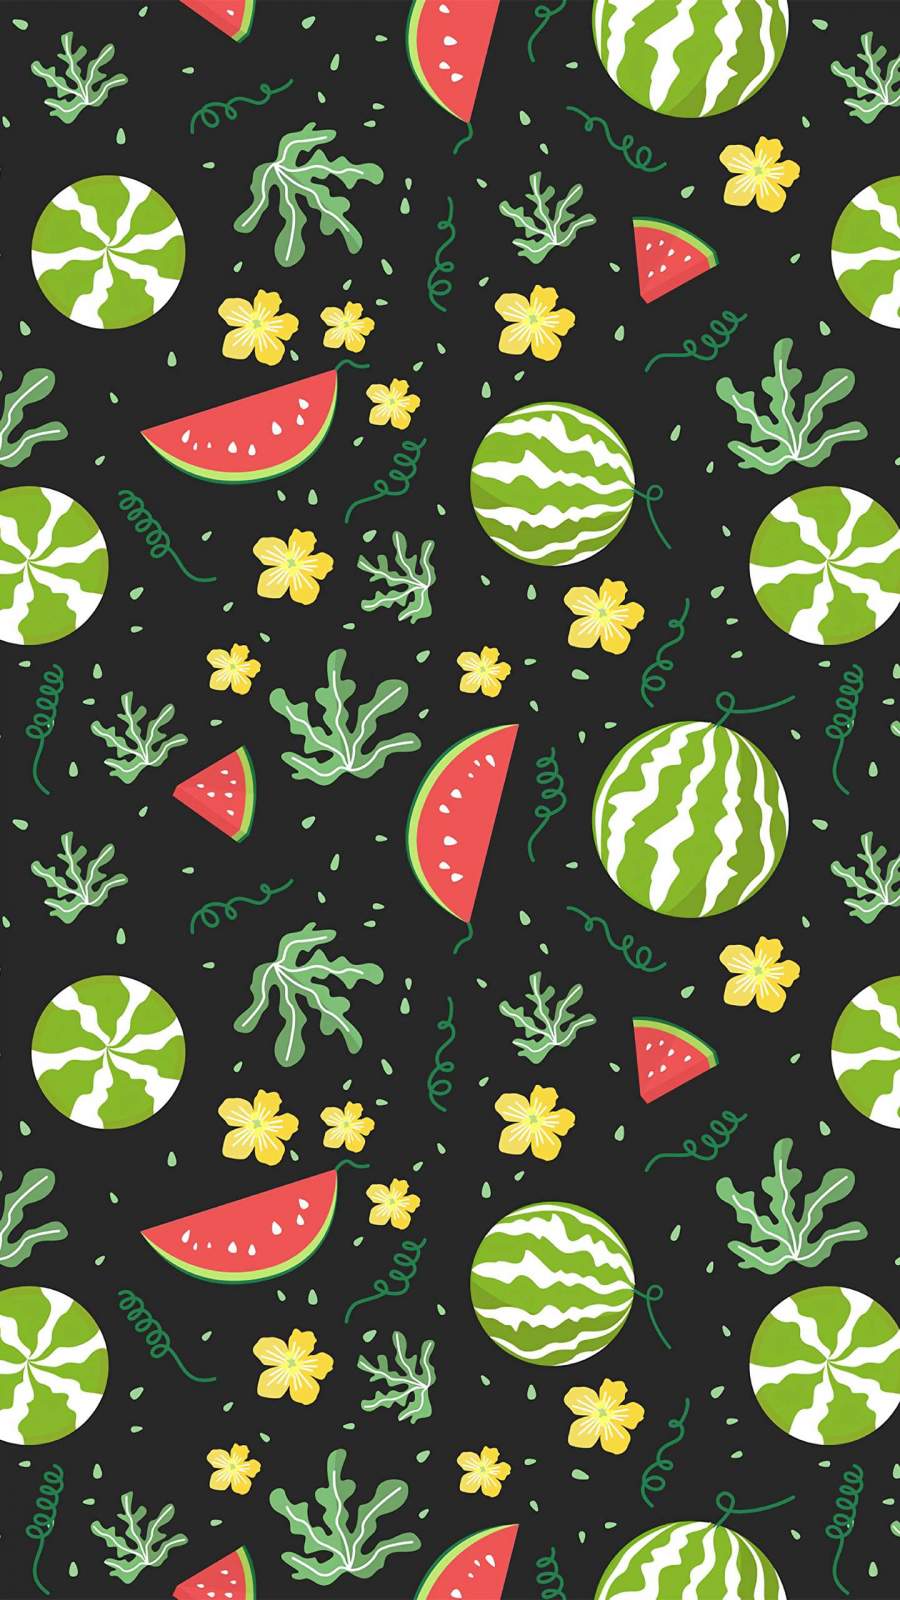 Watermelons wallpaper by mirapav  Download on ZEDGE  2cea